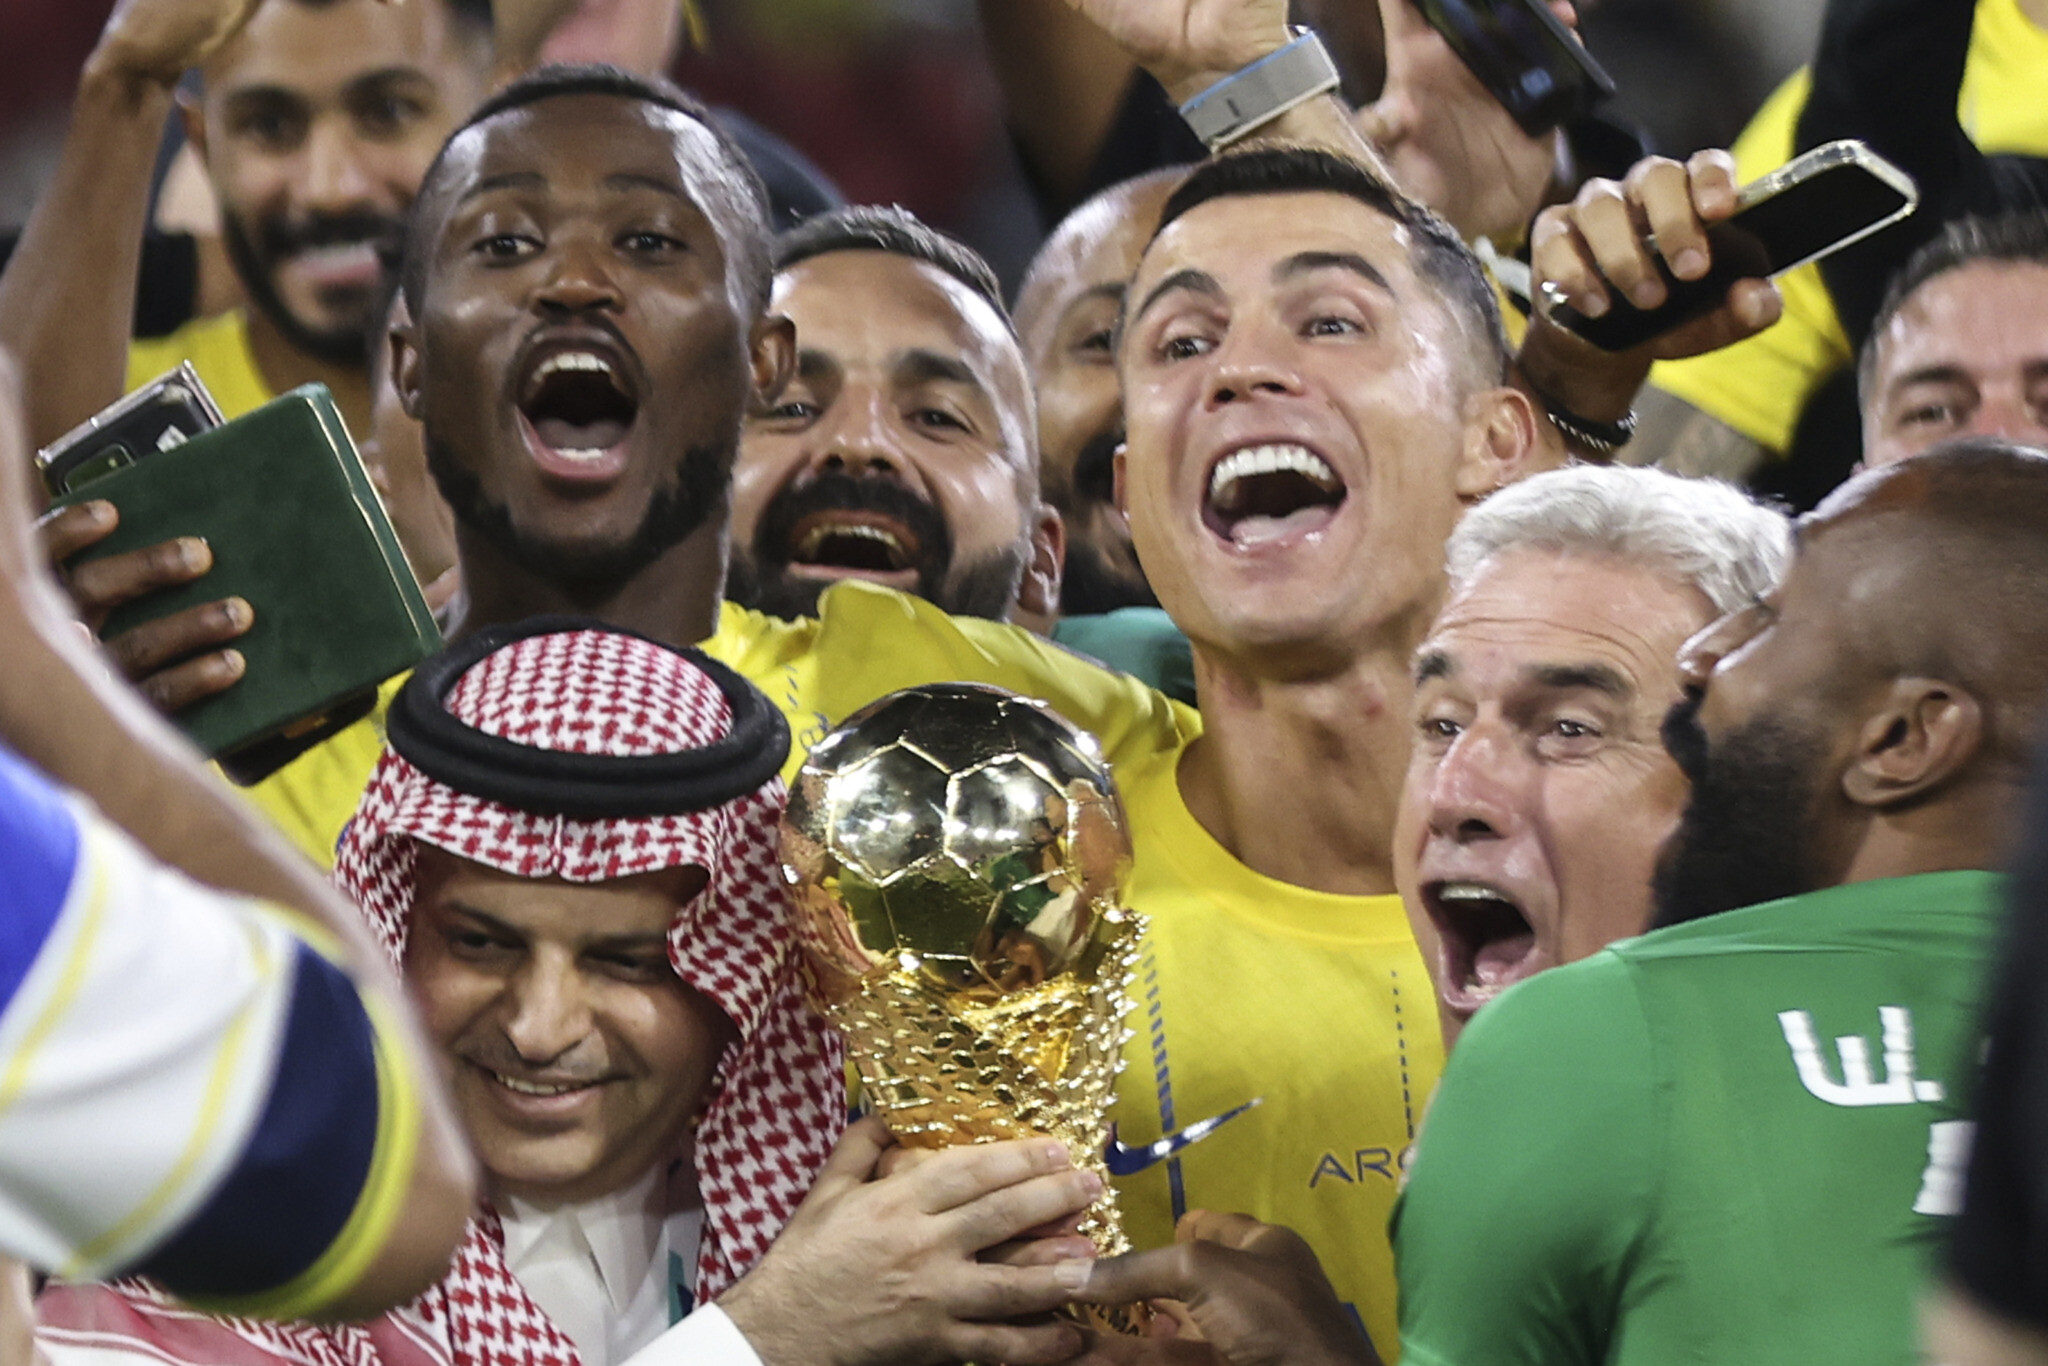 World Cup: Rolls-Royce prize denied by Saudi coach